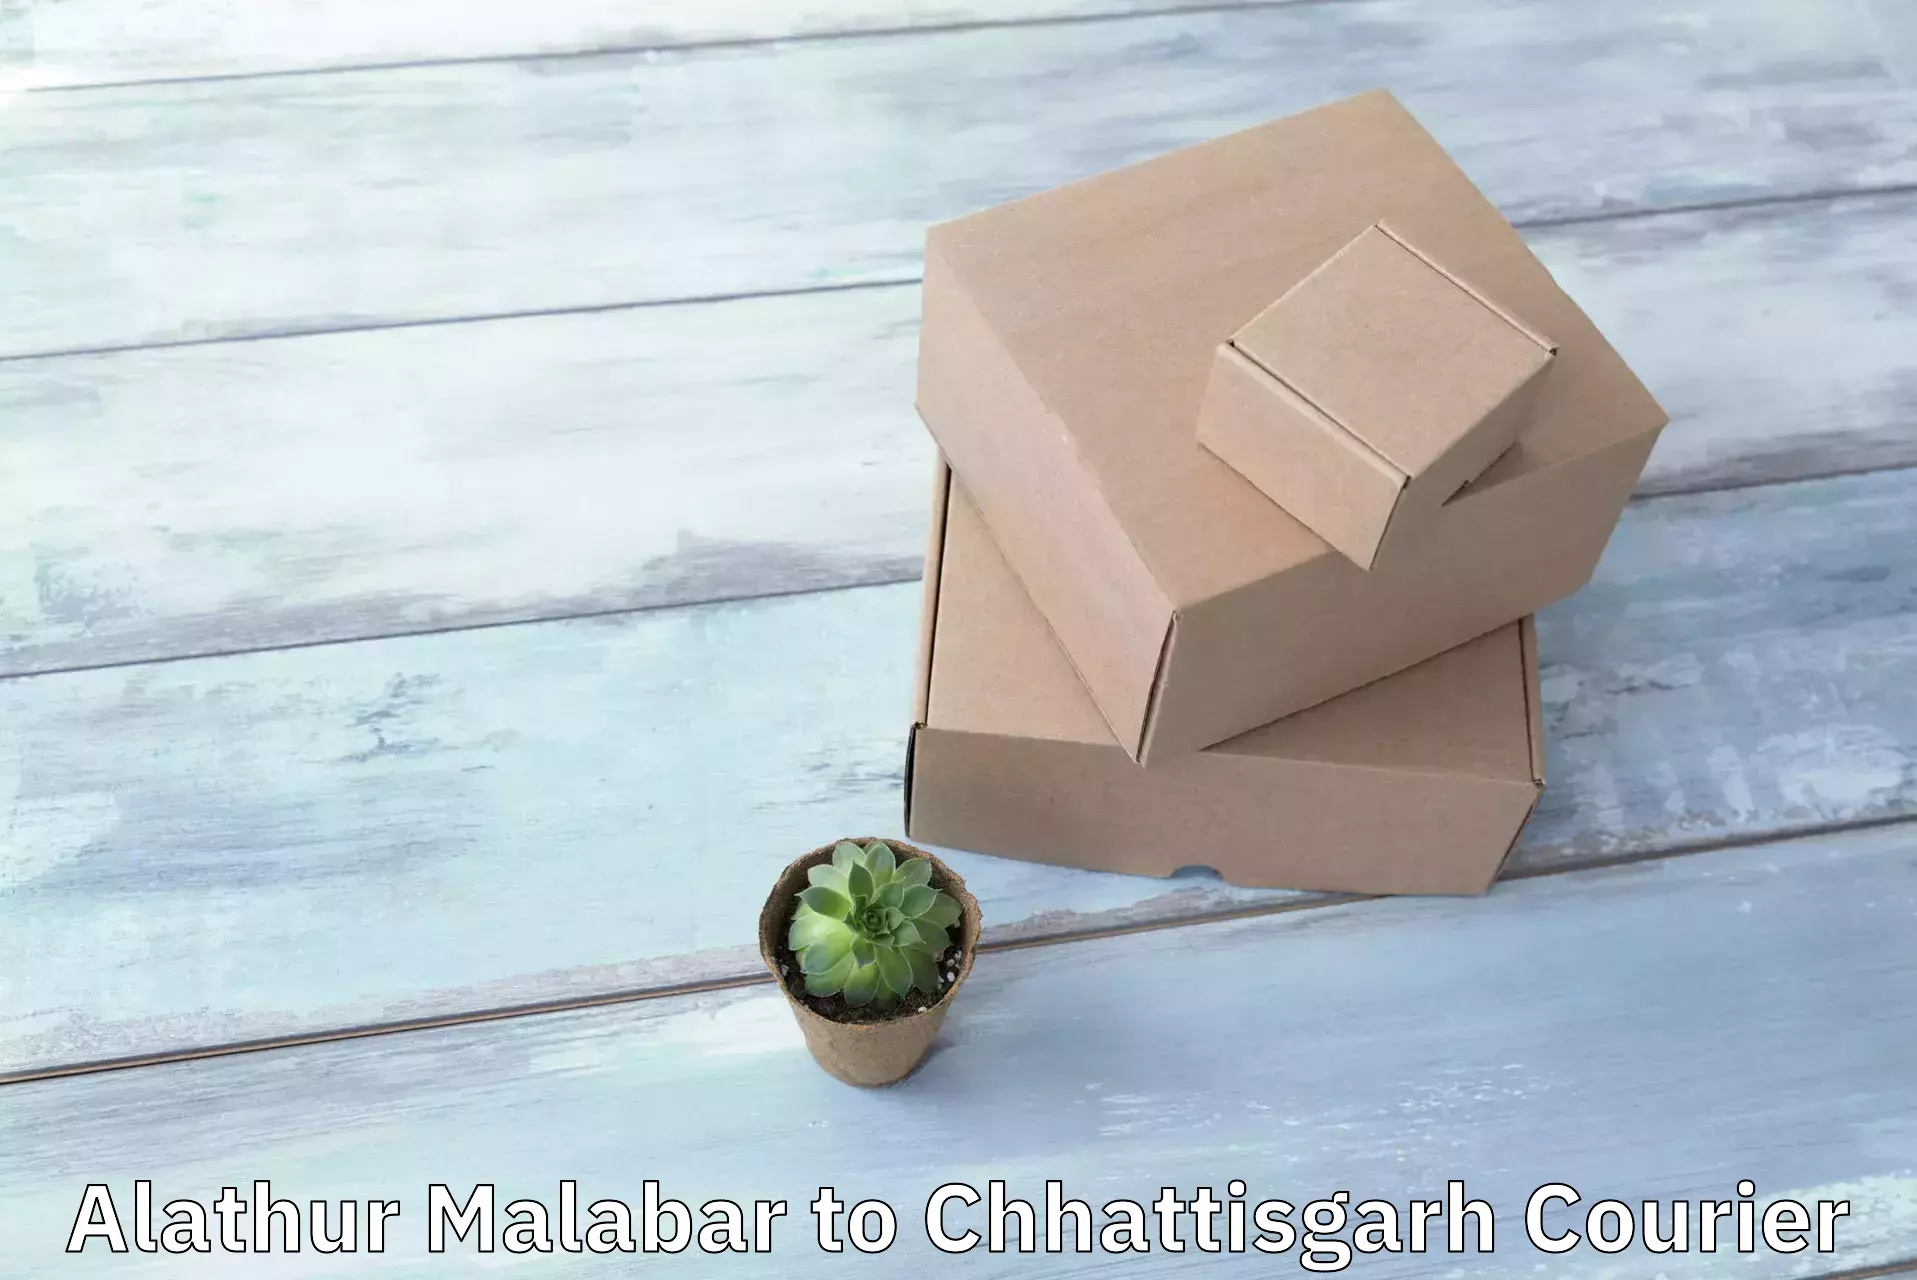 Express mail solutions Alathur Malabar to Patna Chhattisgarh